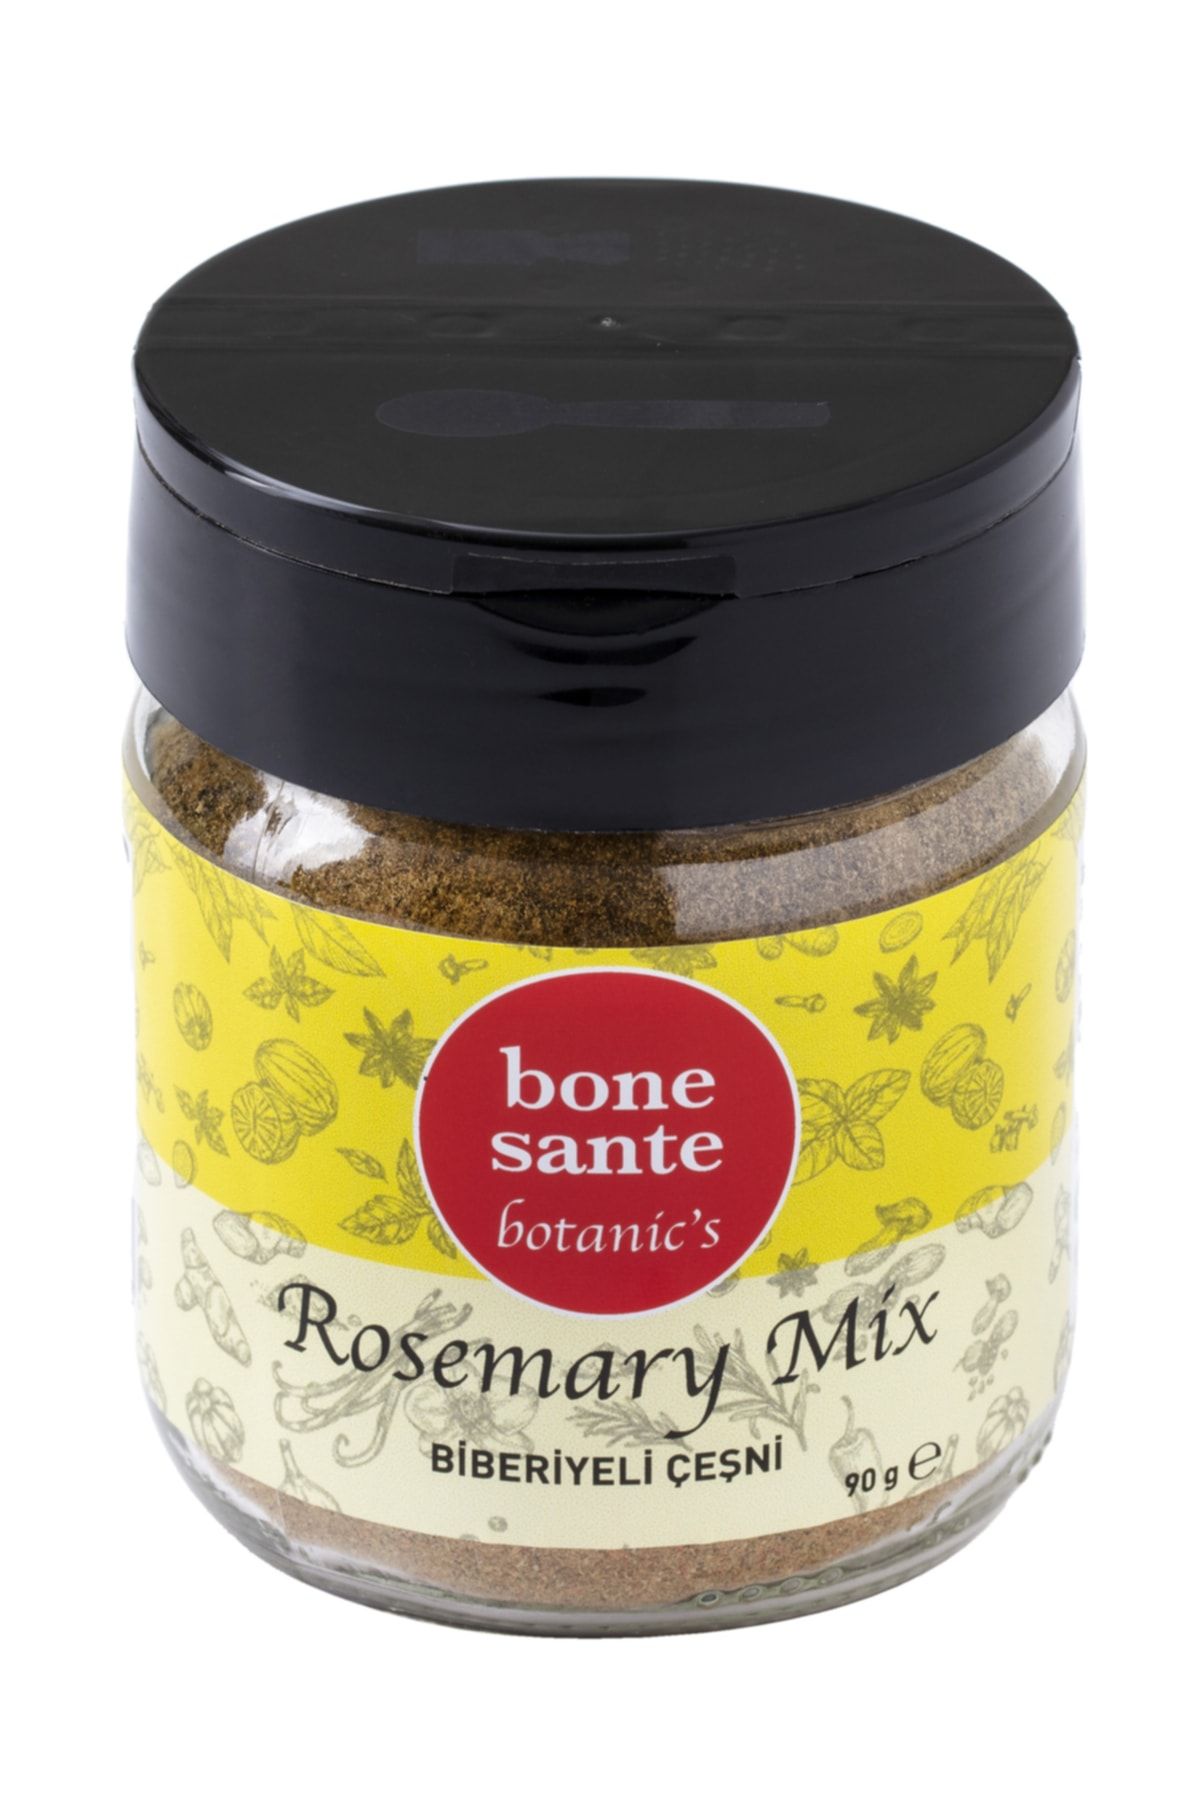 Bone Sante Rosemary Mix - Biberiyeli Çeşni 90g.